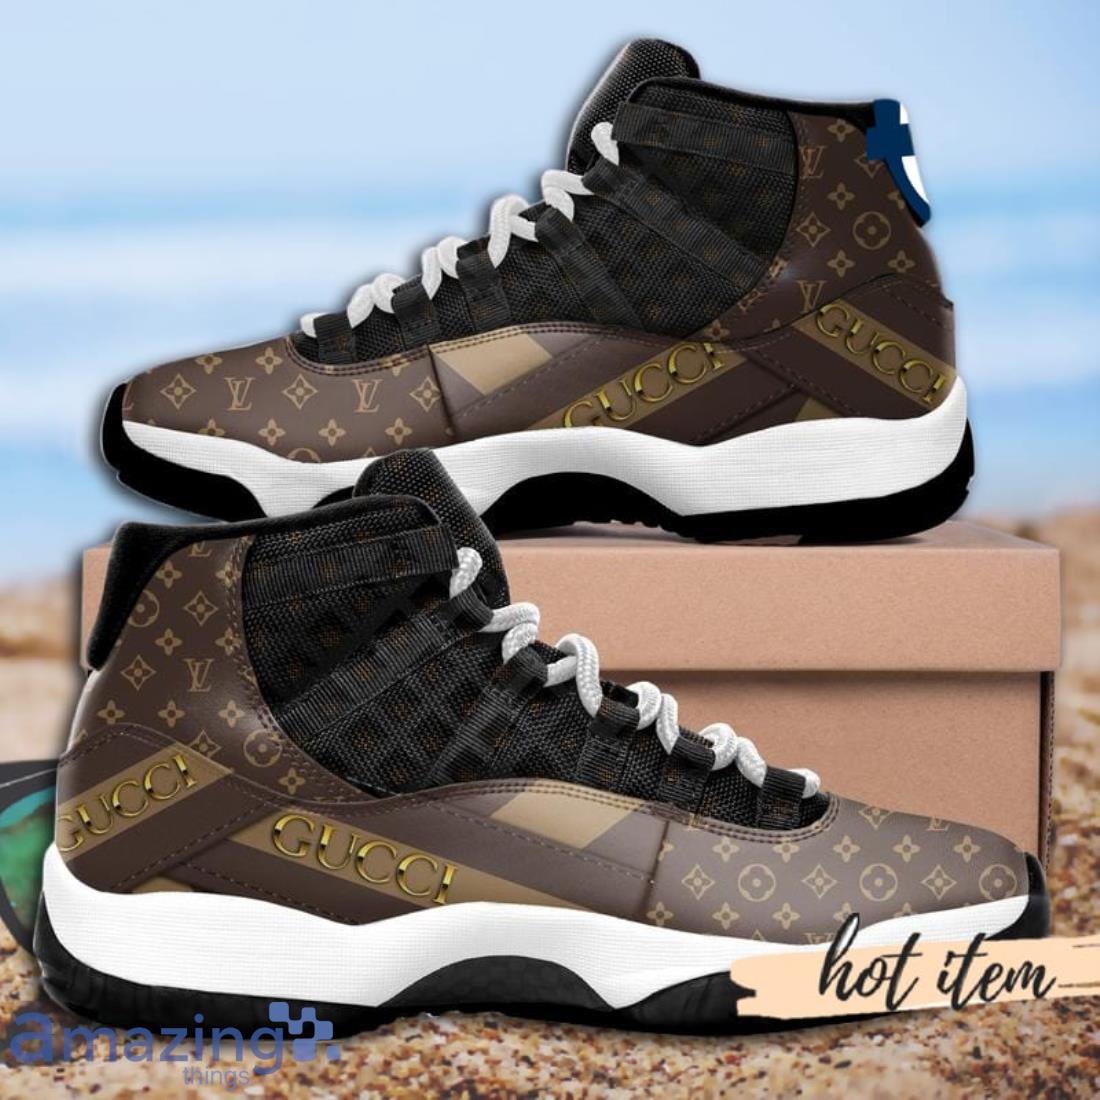 Gucci And Lv Air Jordan 11 Shoes Fashsion Shoes